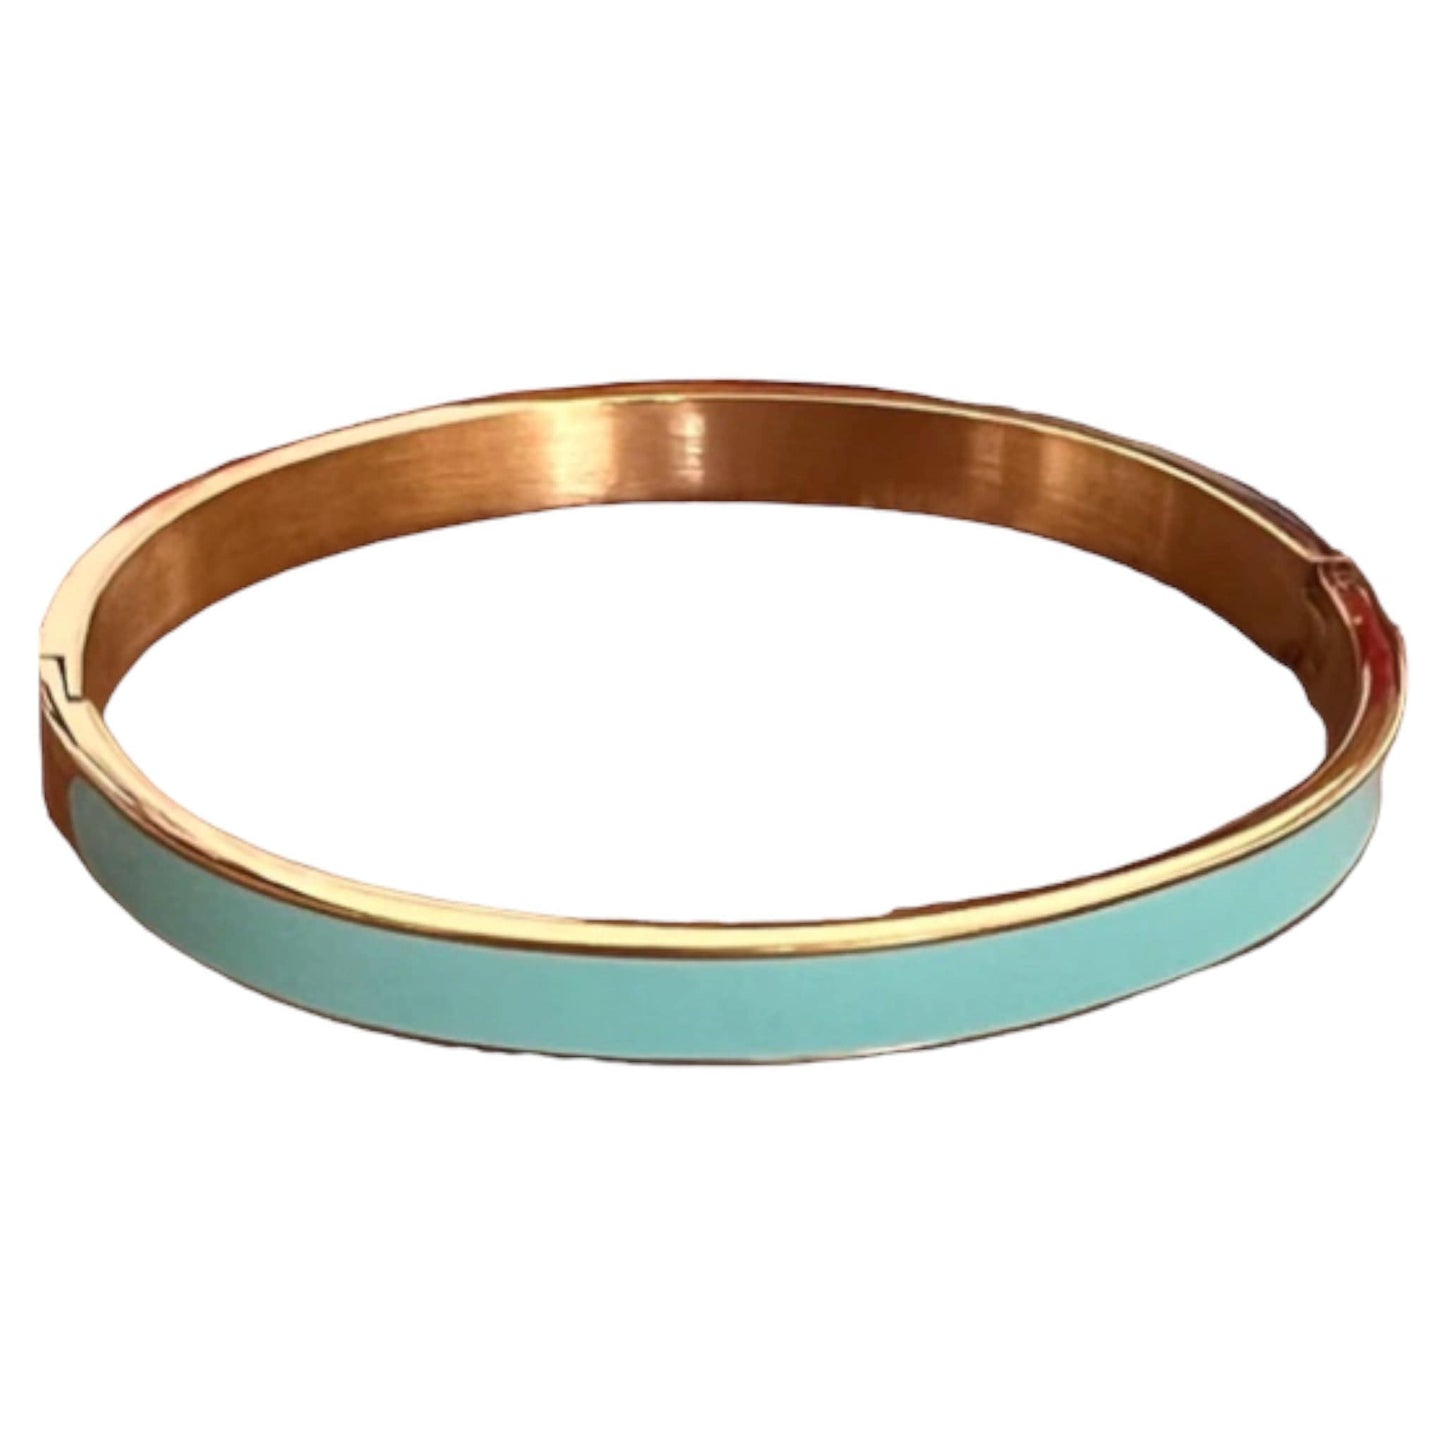 Gold Stainless Enamel Bracelet - Multiple Colors Available